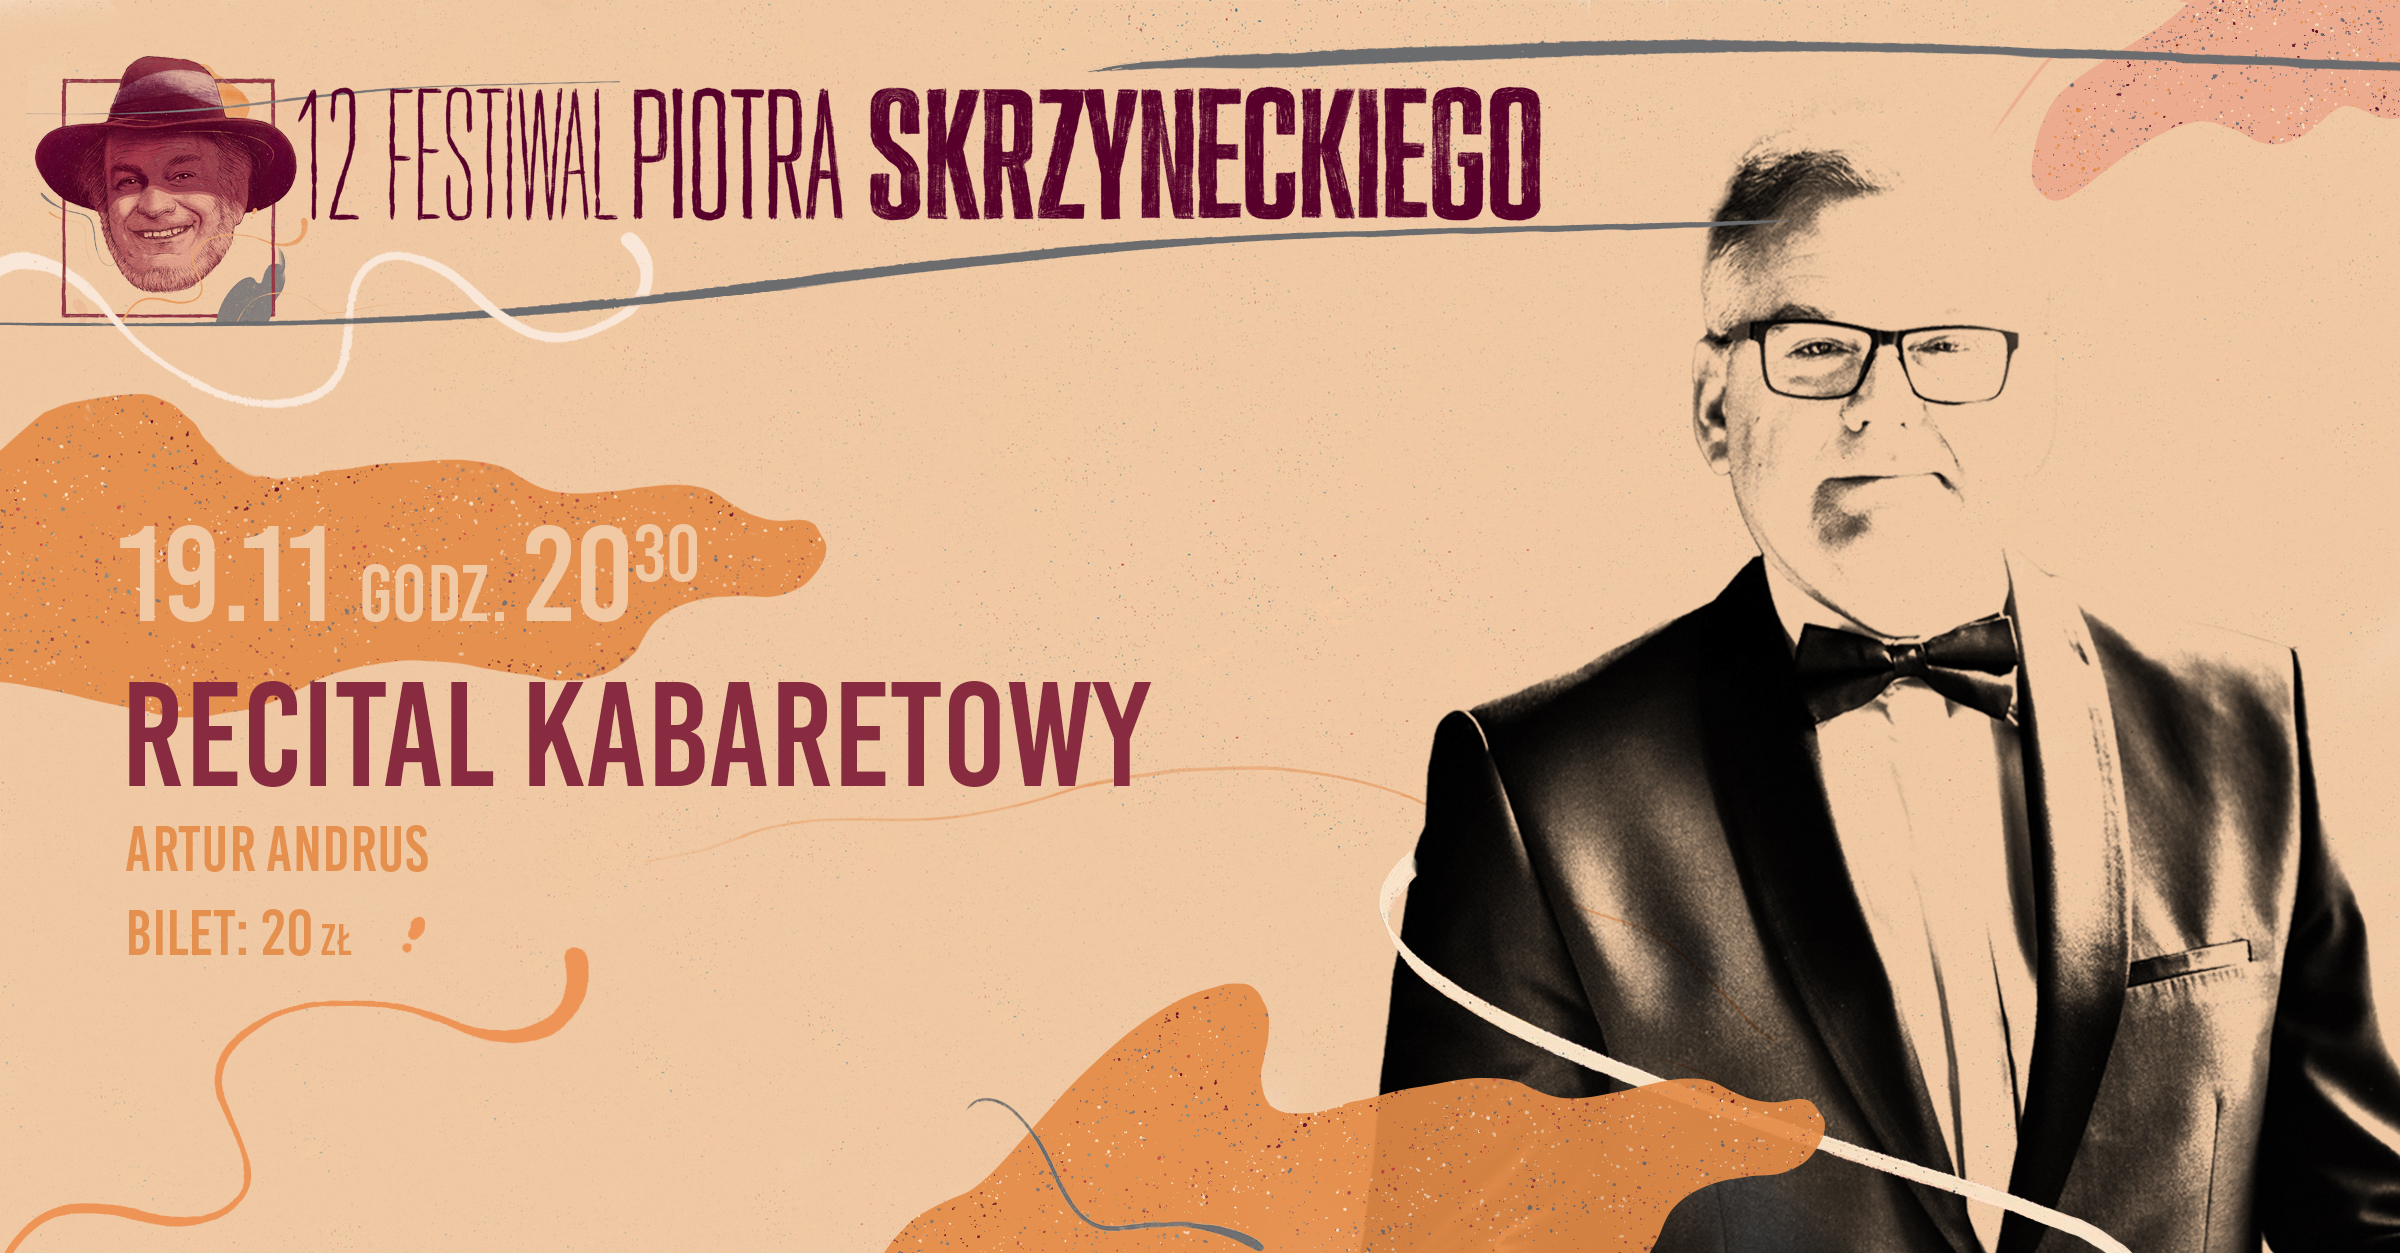 Artur Andrus | recital kabaretowy | Festiwal Piotra Skrzyneckiego